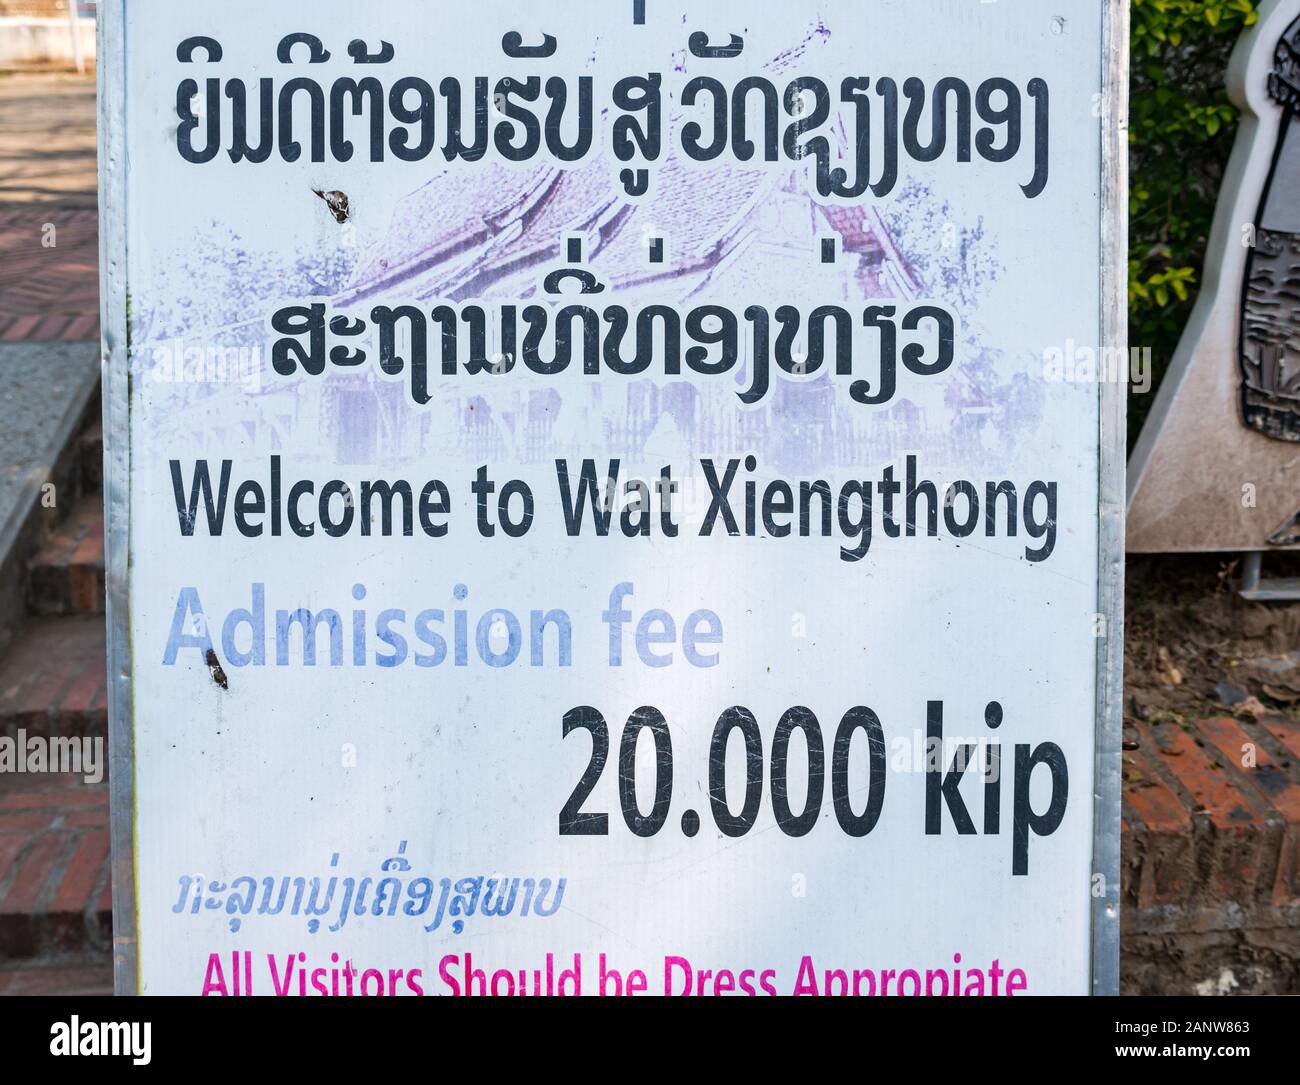 Ingresso sign & tassa di ammissione in kip laotiani, Wat Xien cosa tempio, Luang Prabang, Laos, sud-est asiatico Foto Stock